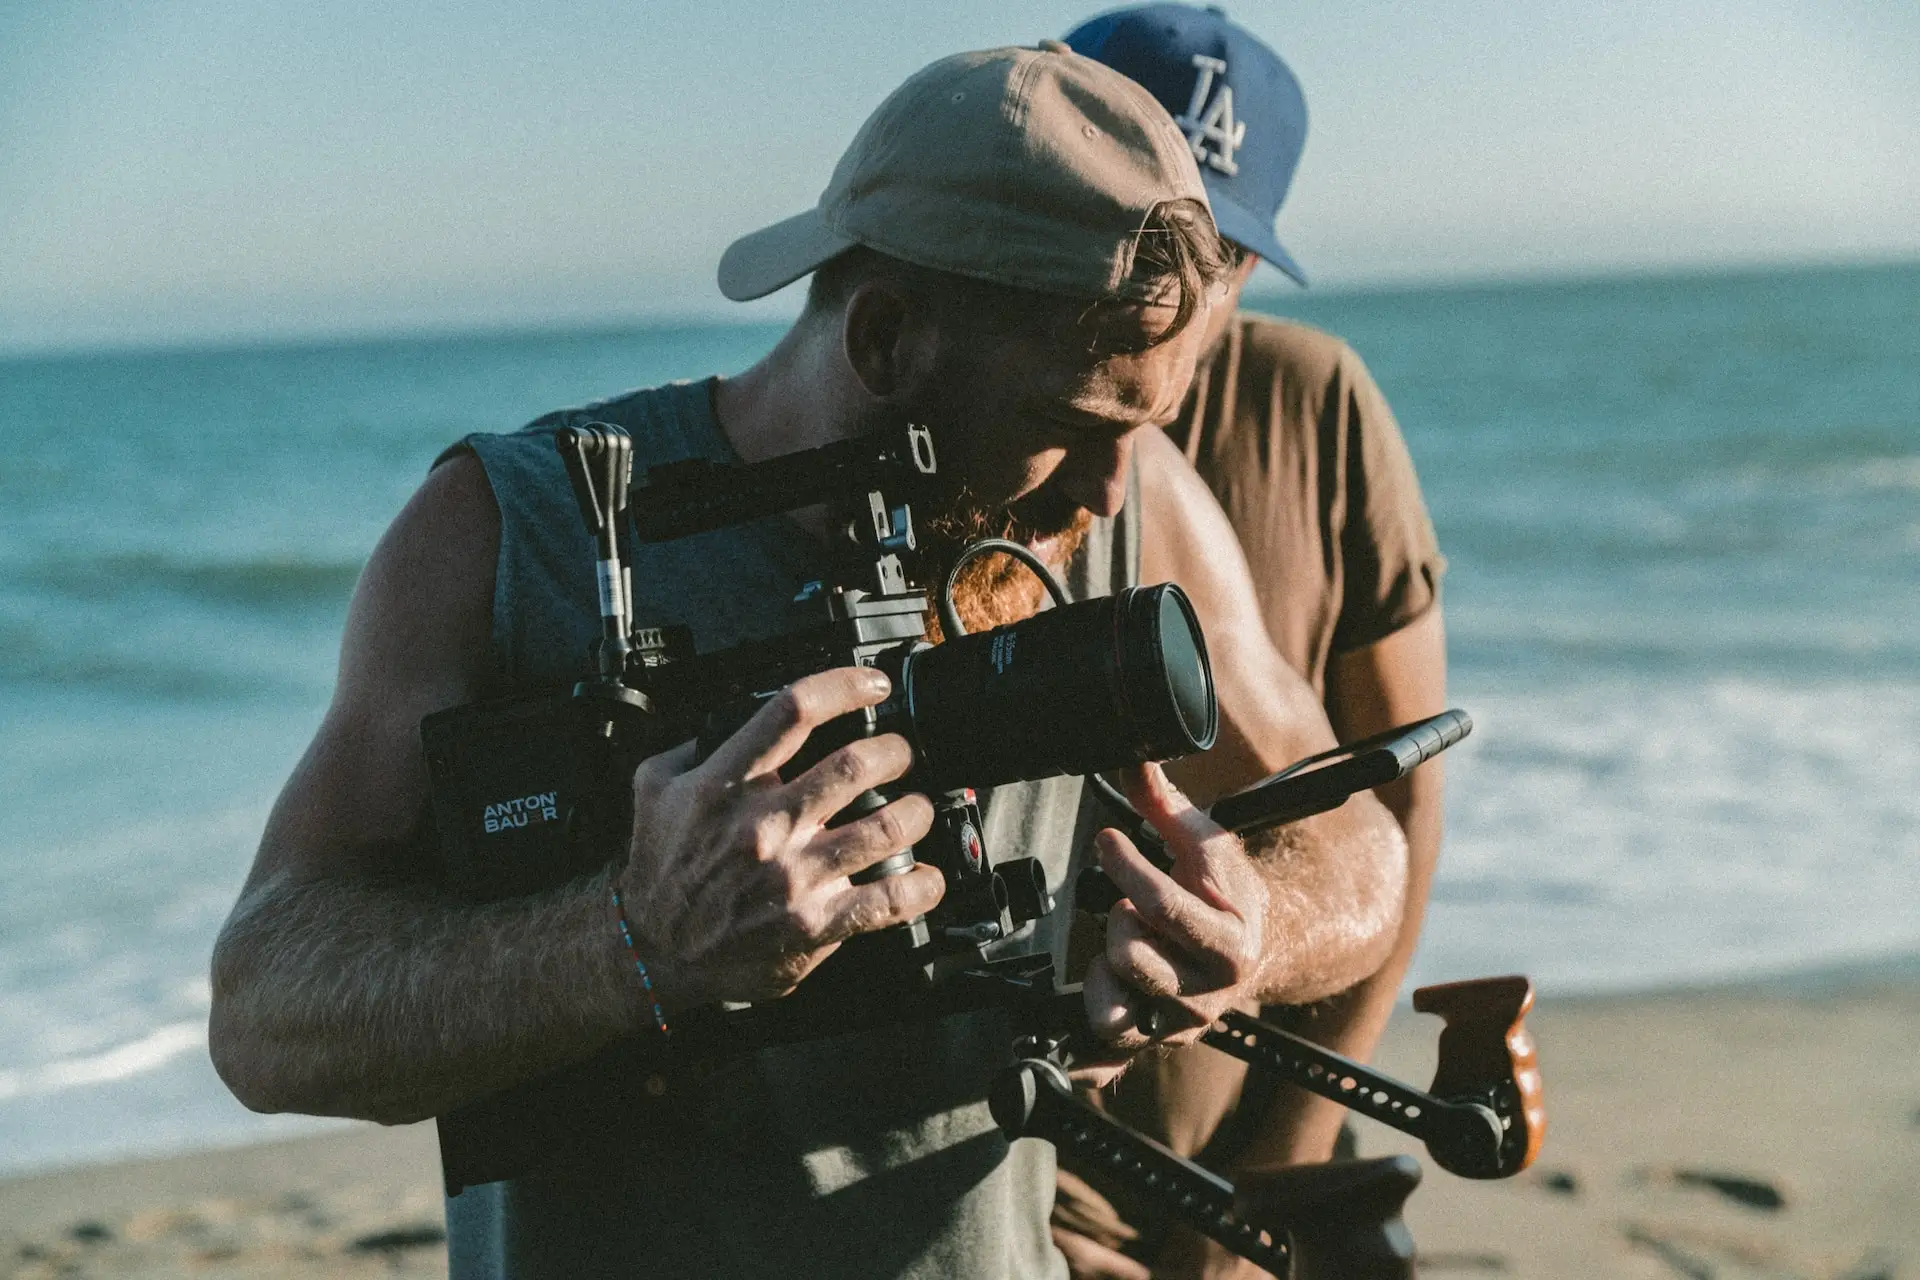 Shooting footage on a beach 